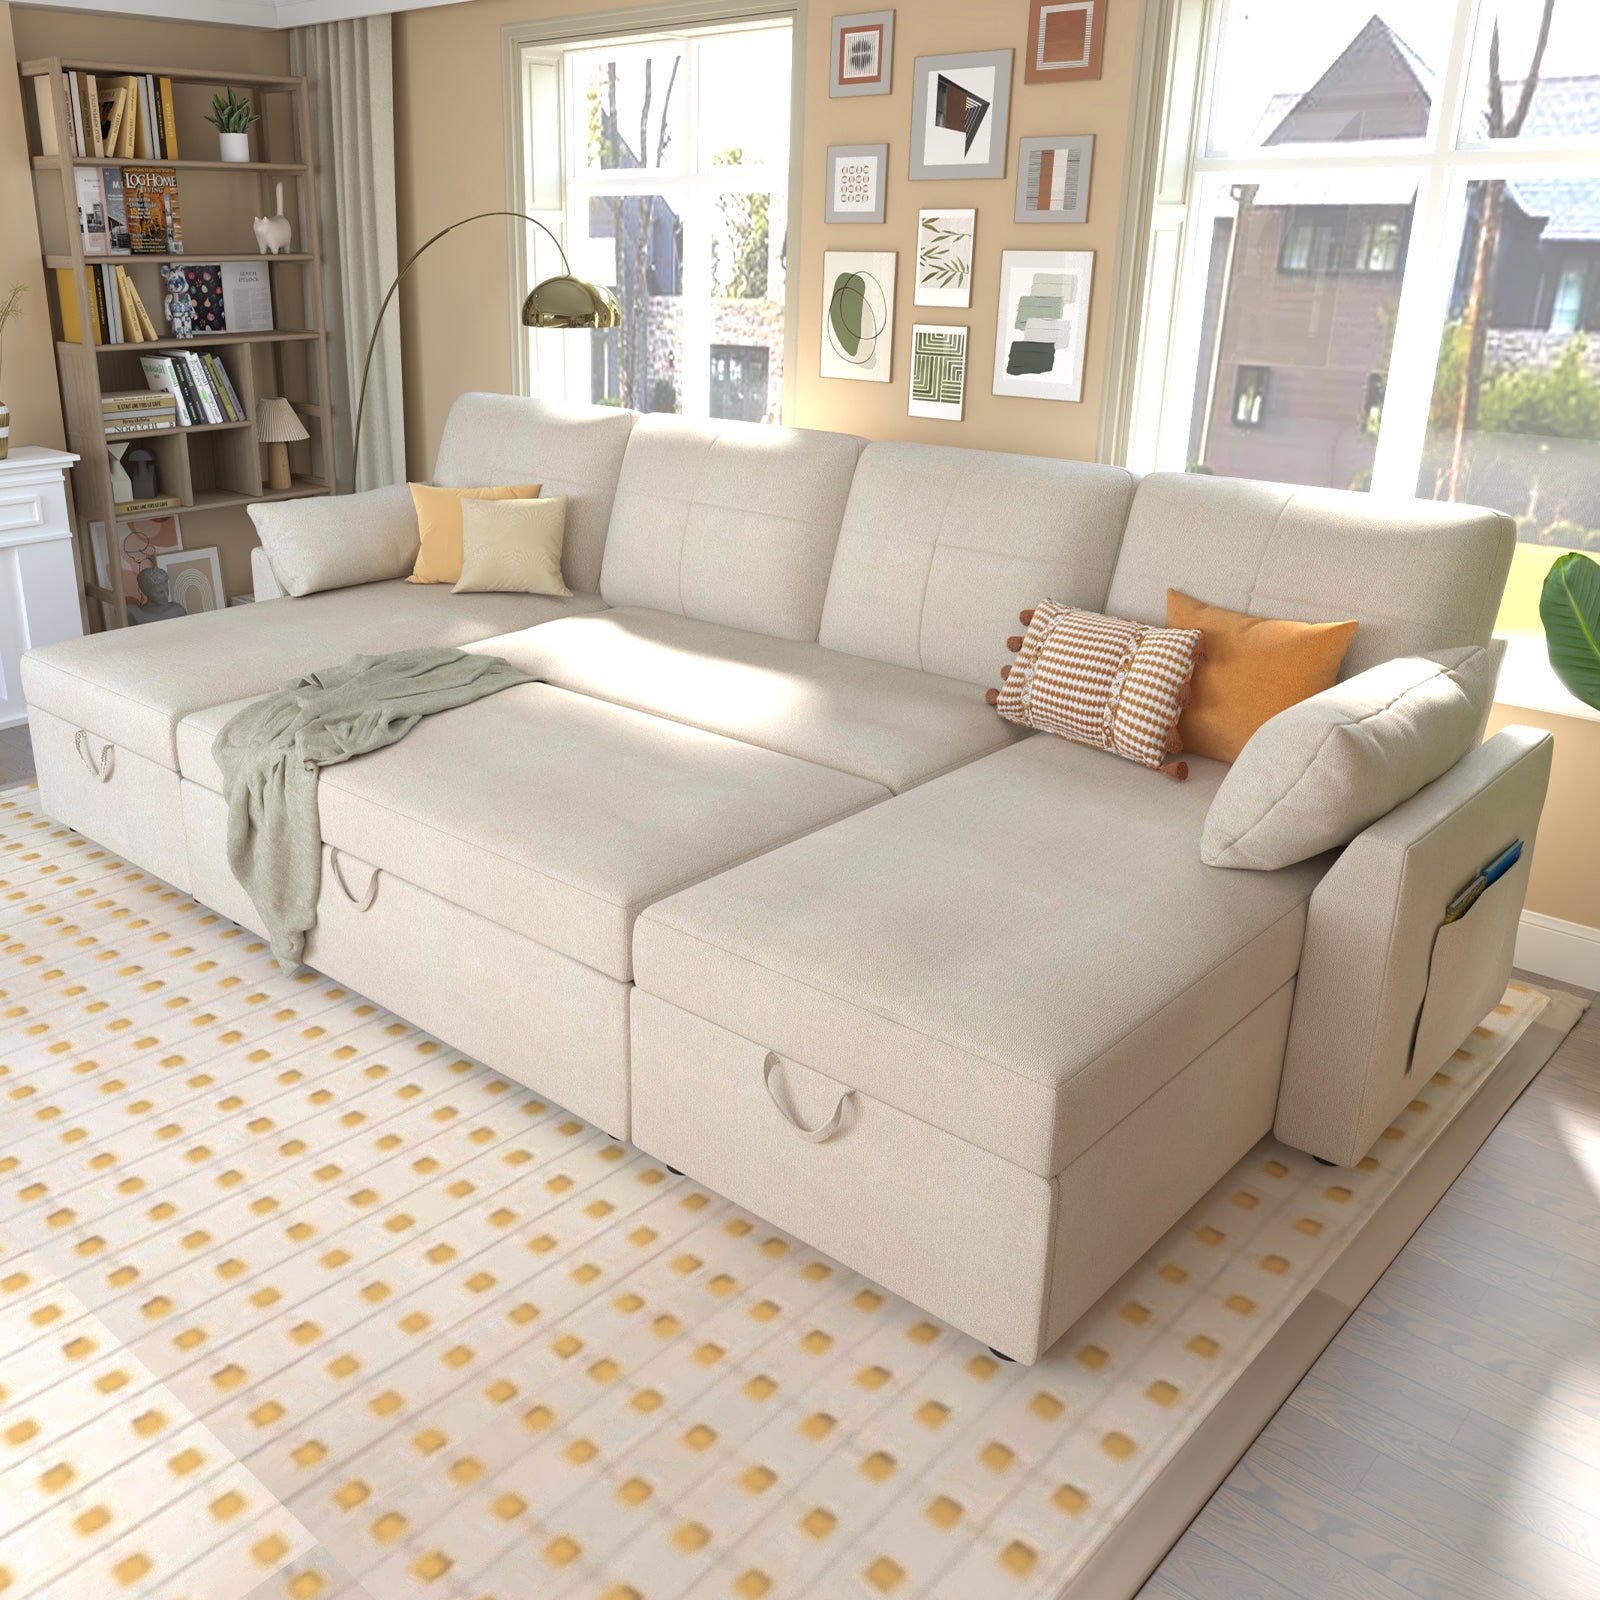 Amerlife Easton Sleeper Sofa Oversized Living Room Storage Chaise 2 in 1